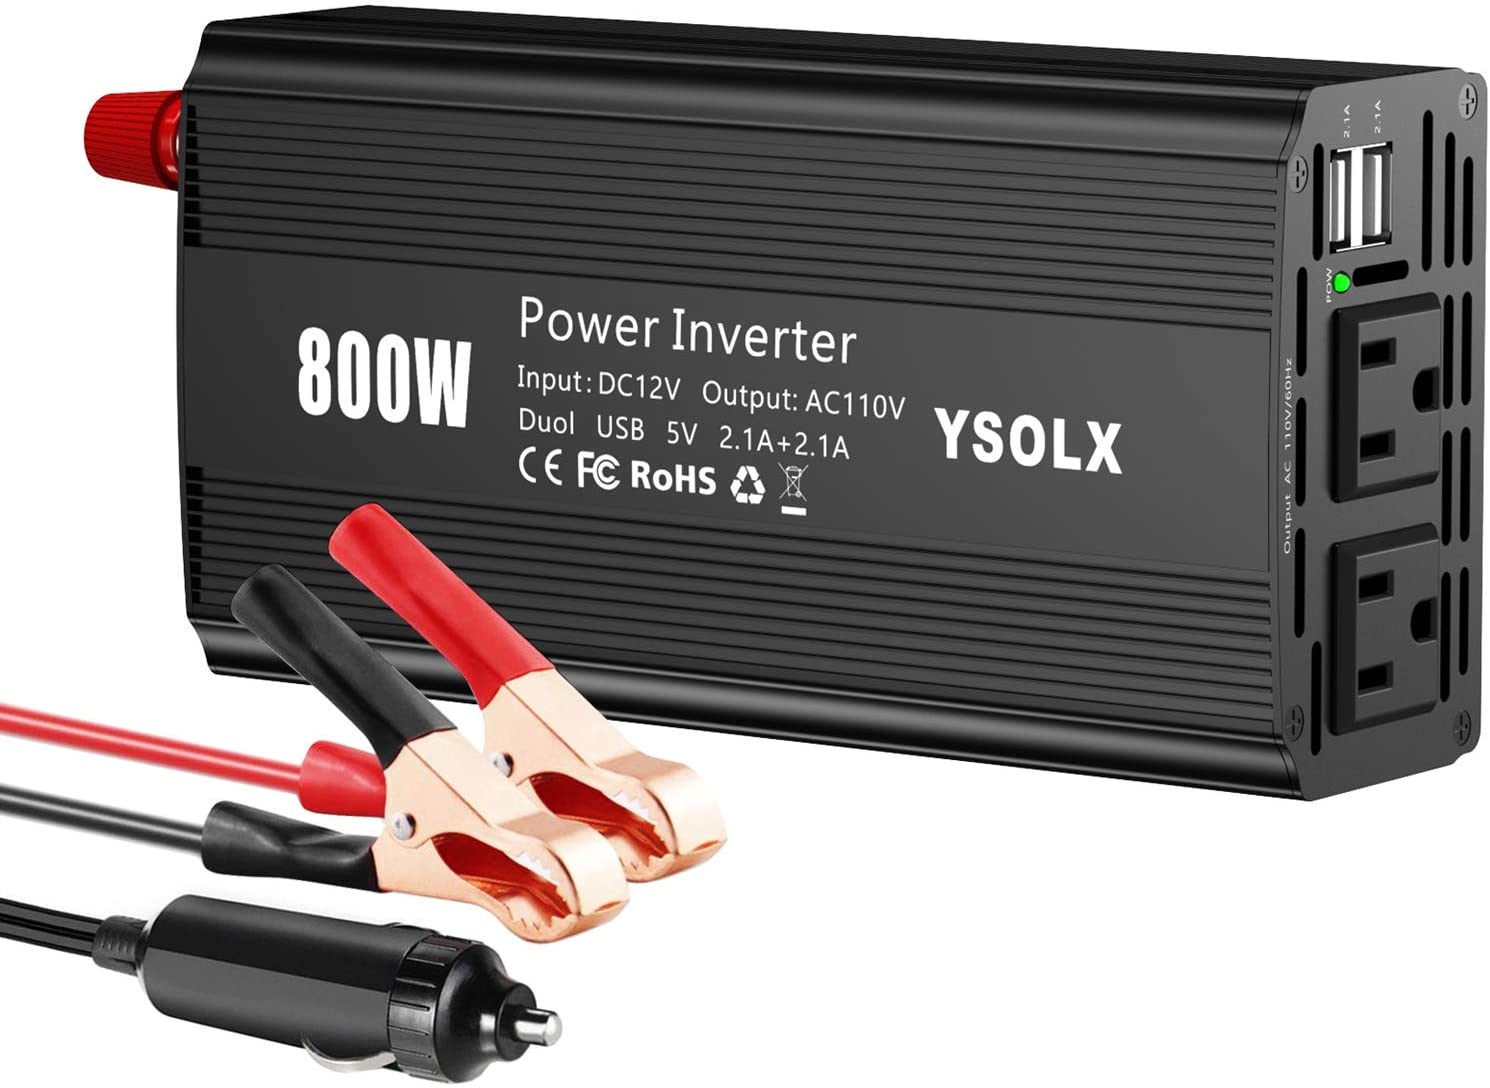 YSOLX 800W Power Inverter DC 12V to 110V AC Converter Car Plug Adapter Outlet Charger for Laptop Computer